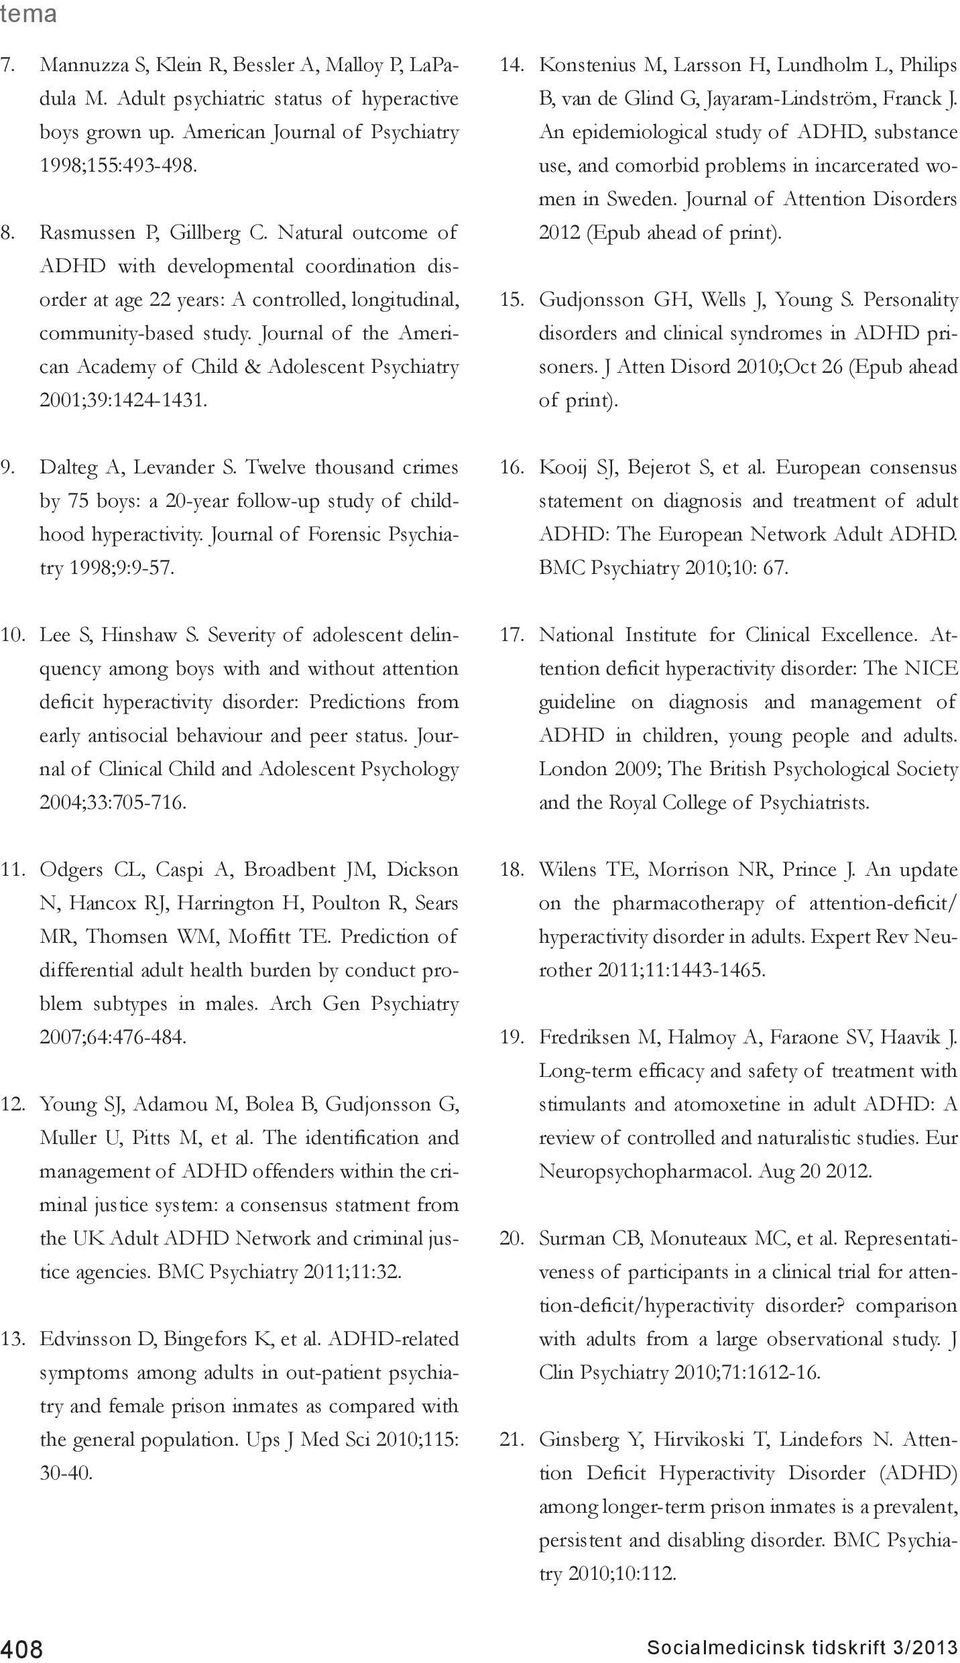 Journal of the American Academy of Child & Adolescent Psychiatry 2001;39:1424-1431. 14. Konstenius M, Larsson H, Lundholm L, Philips B, van de Glind G, Jayaram-Lindström, Franck J.